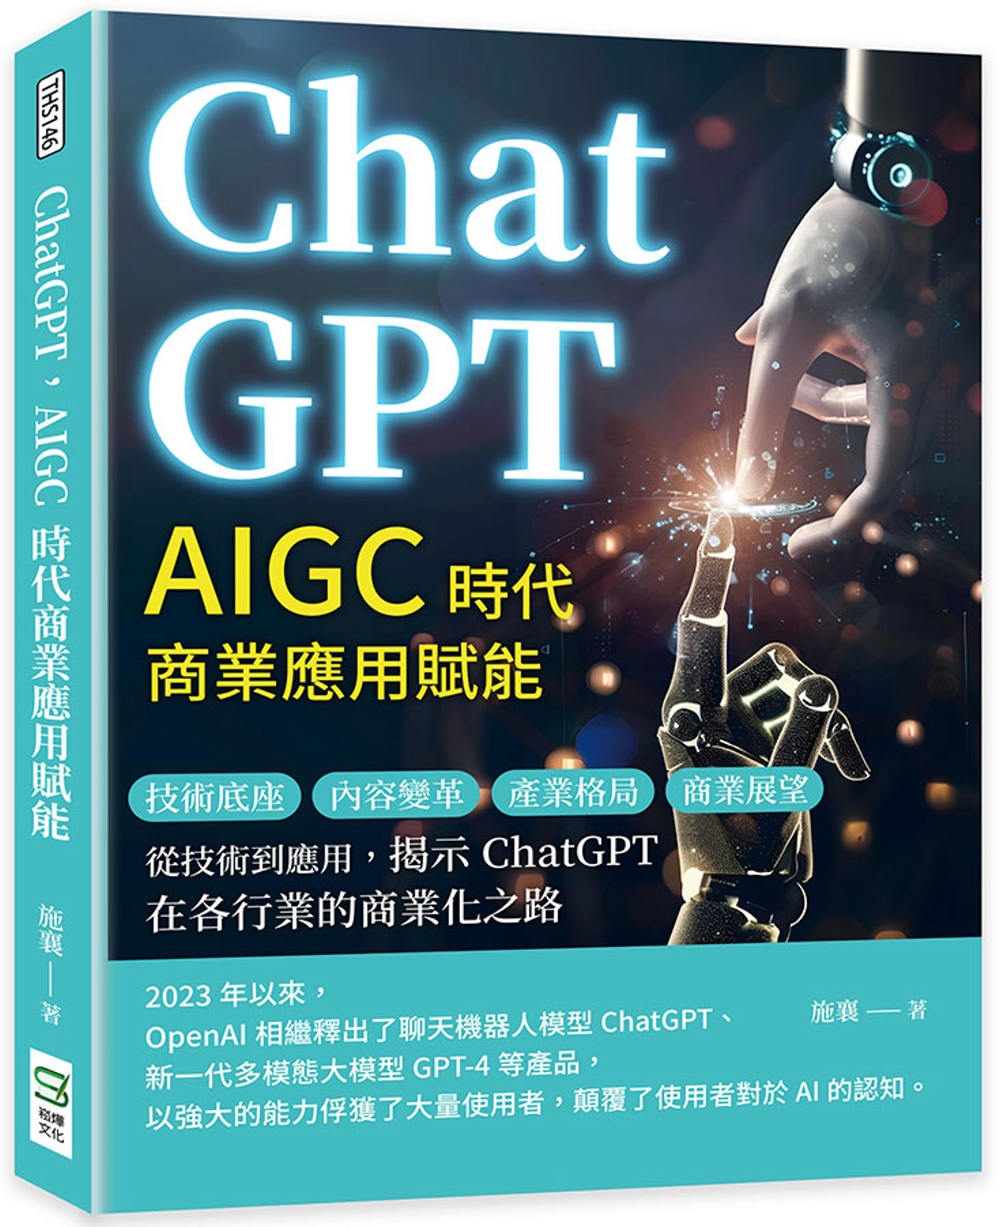 ChatGPT，AIGC時代商業應用賦能：技術底座、內容變革...